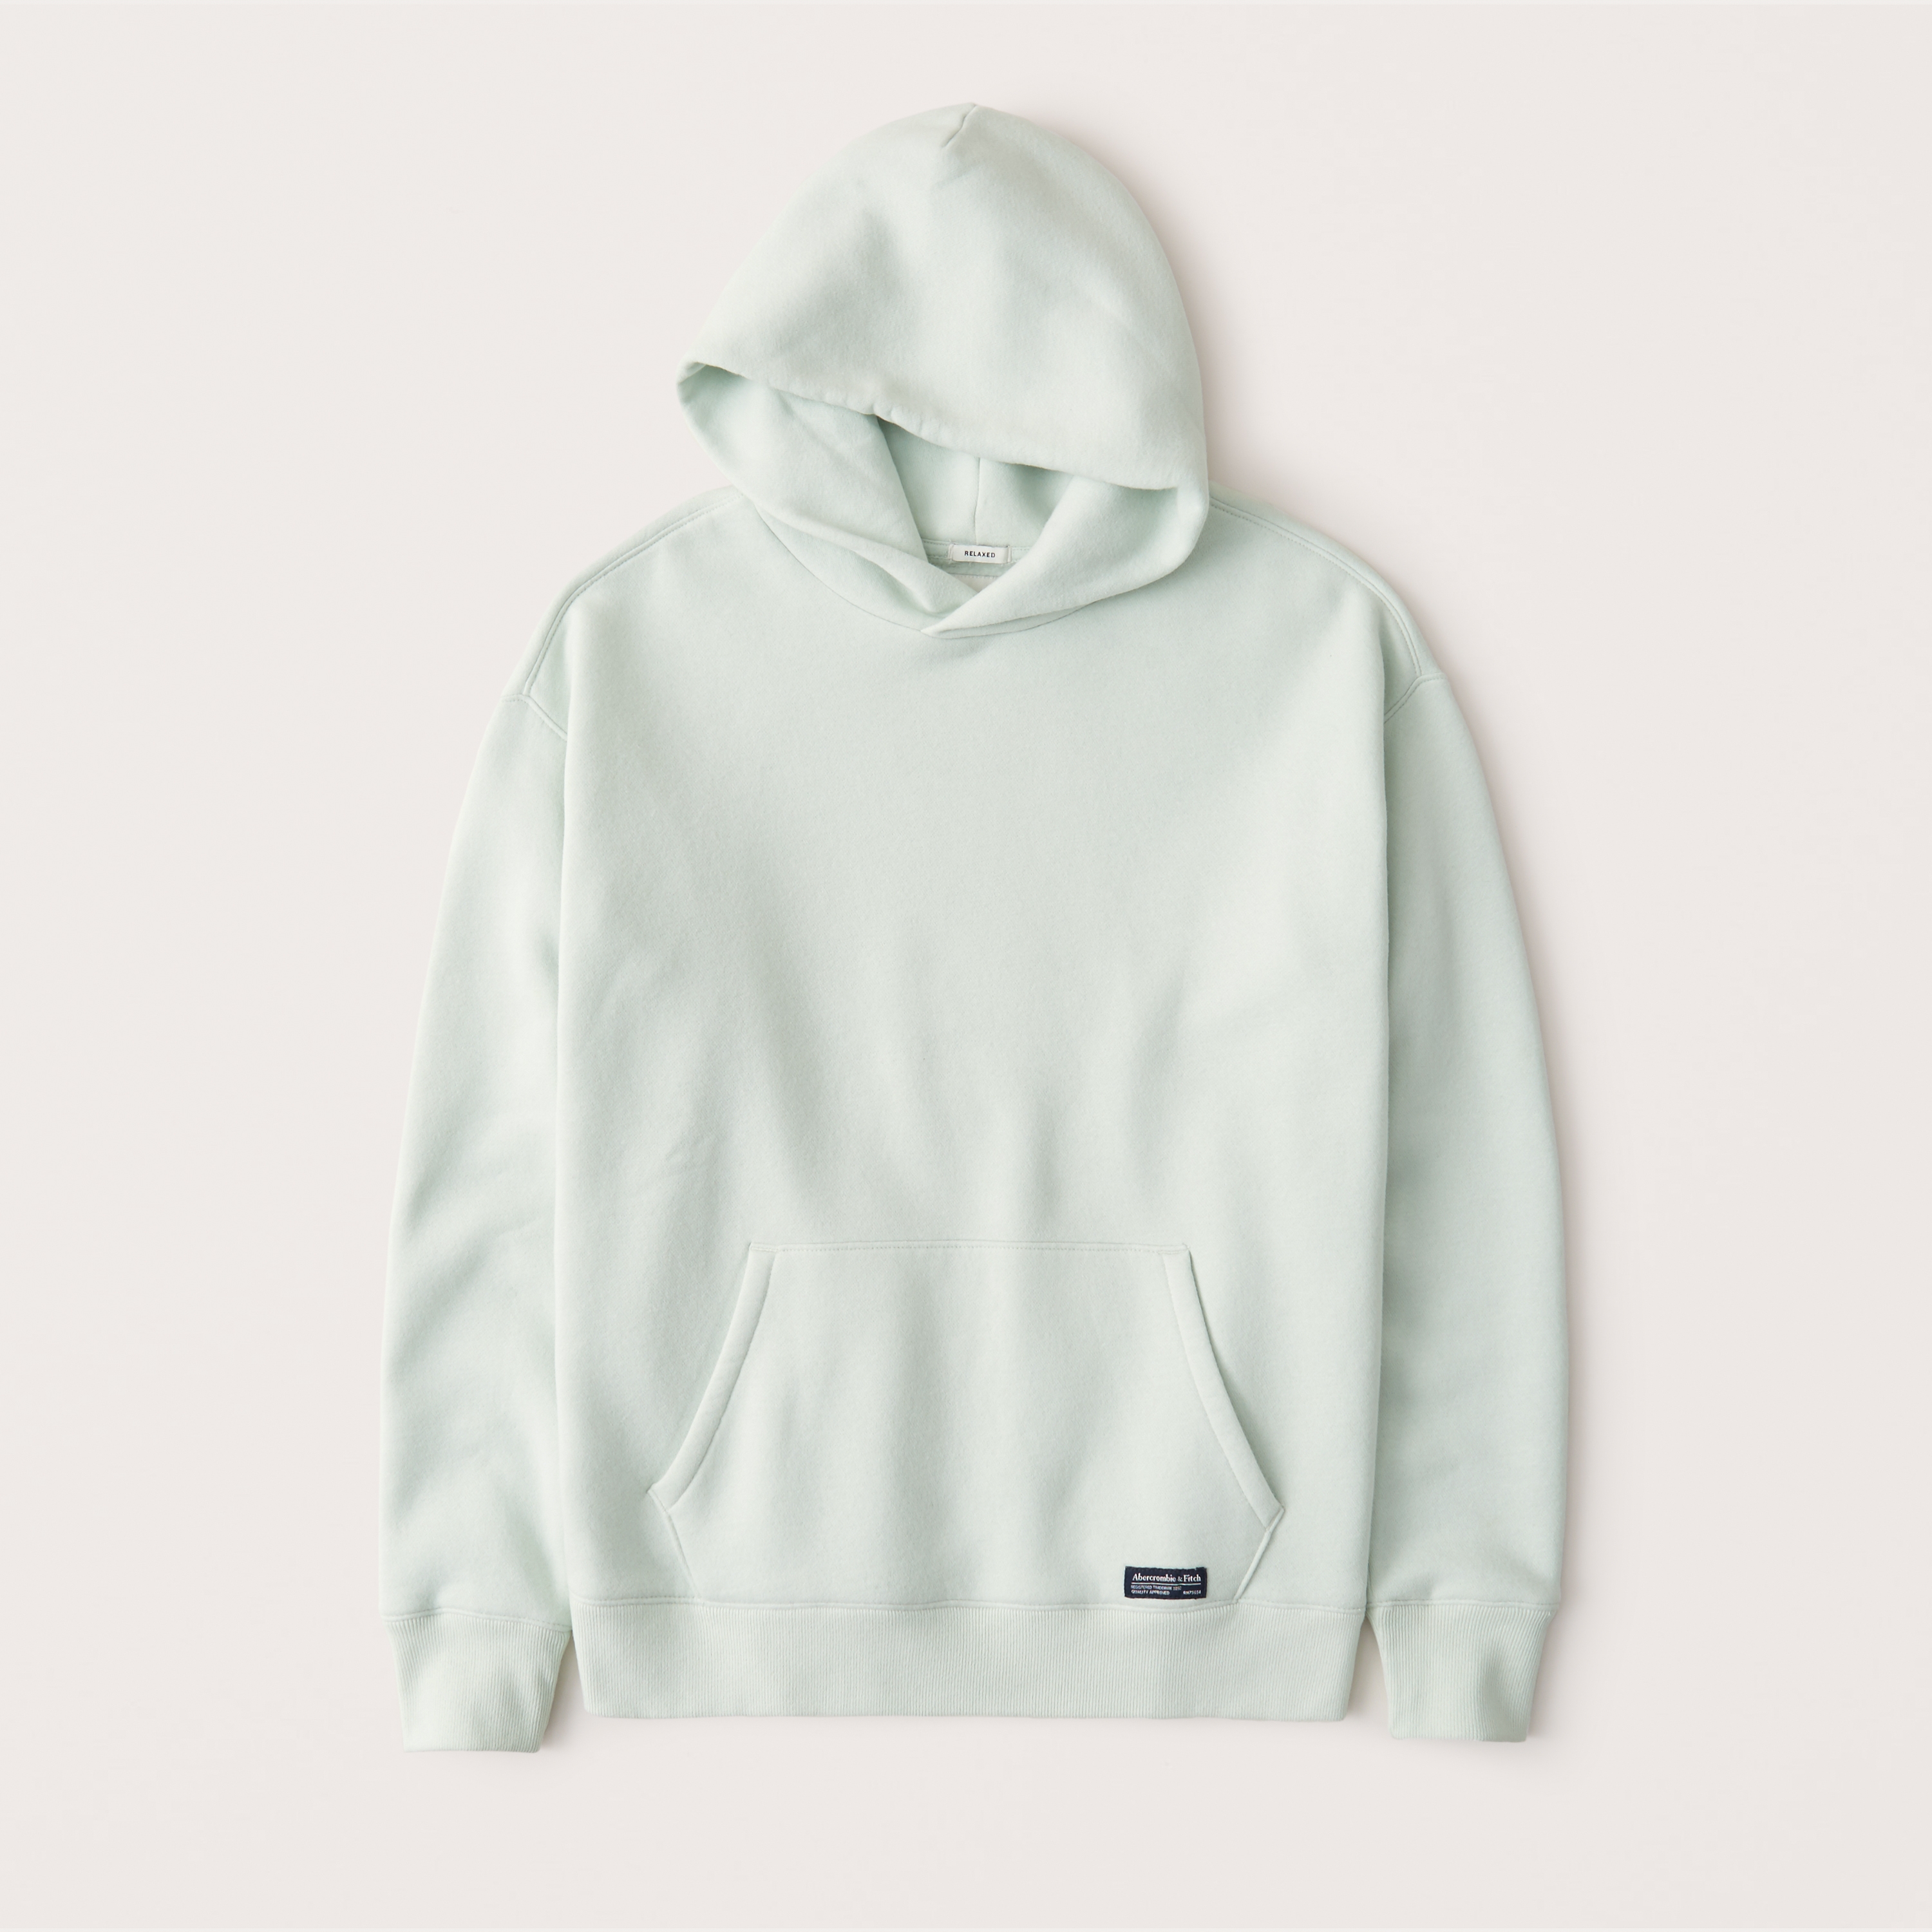 a&f hoodies sale